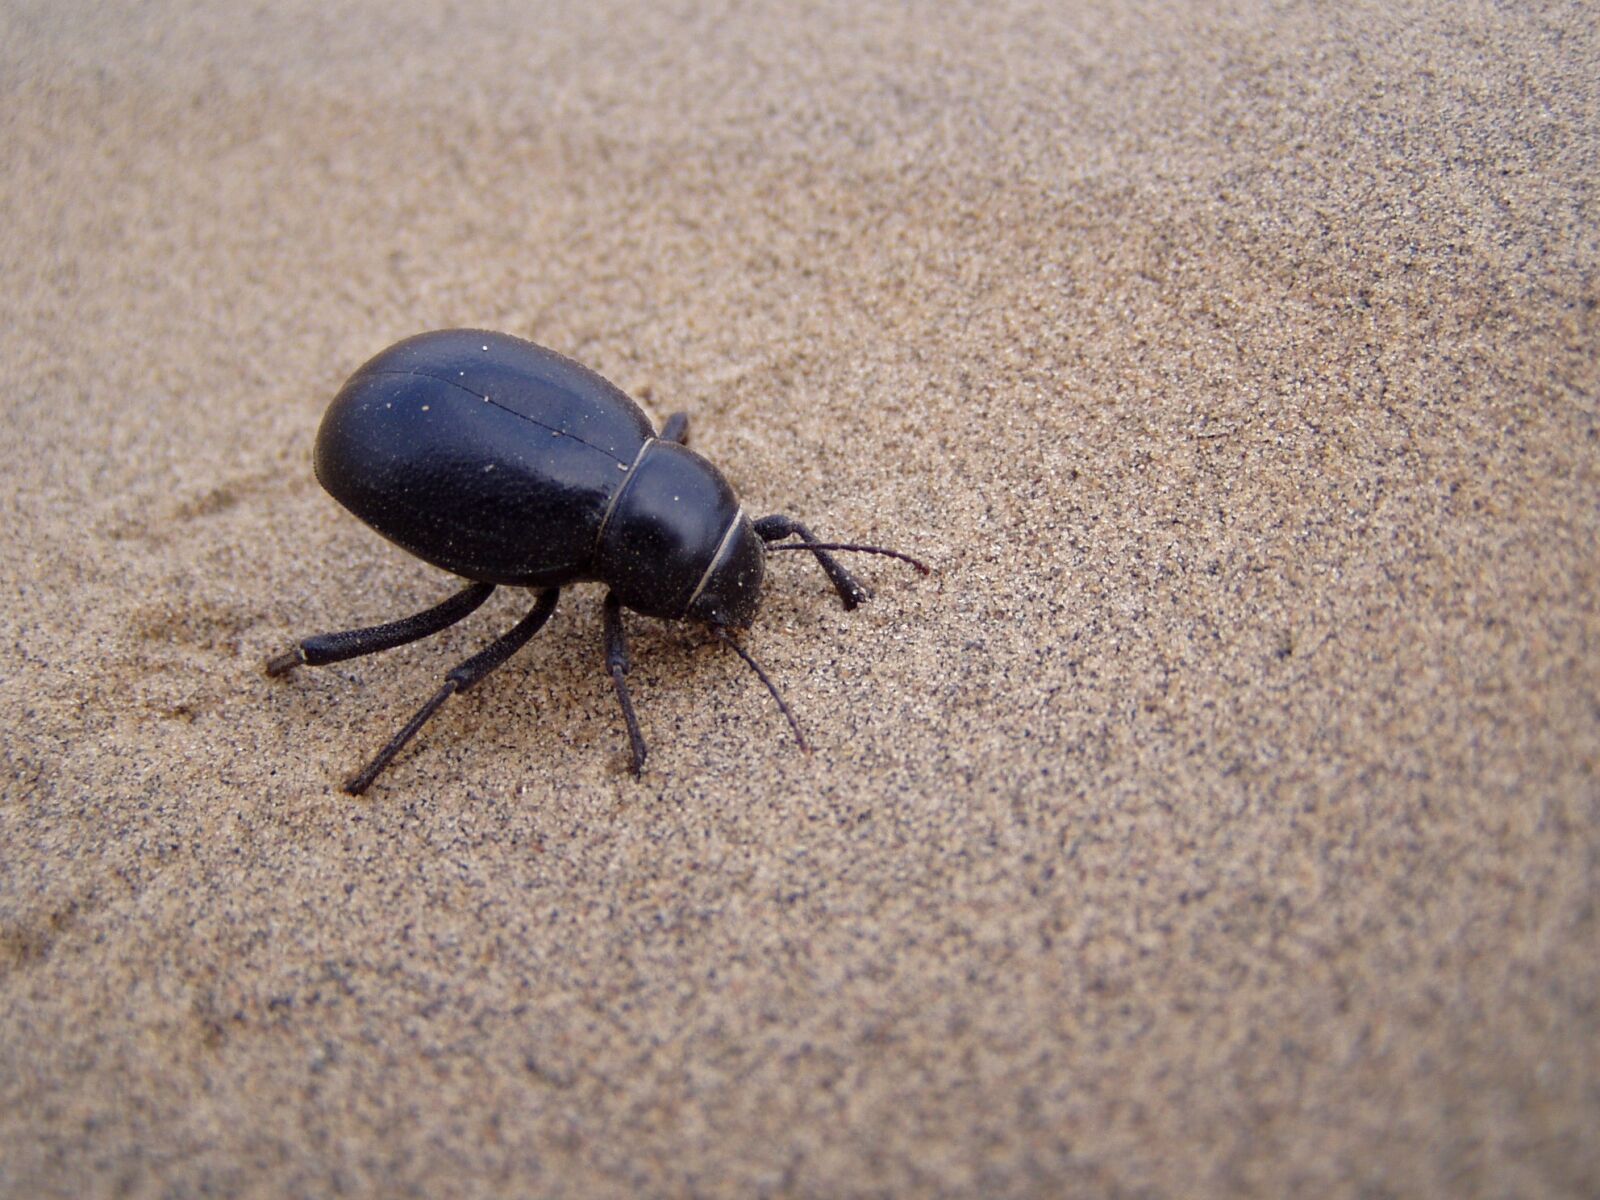 Olympus C720UZ sample photo. Beetle, desert, sand photography